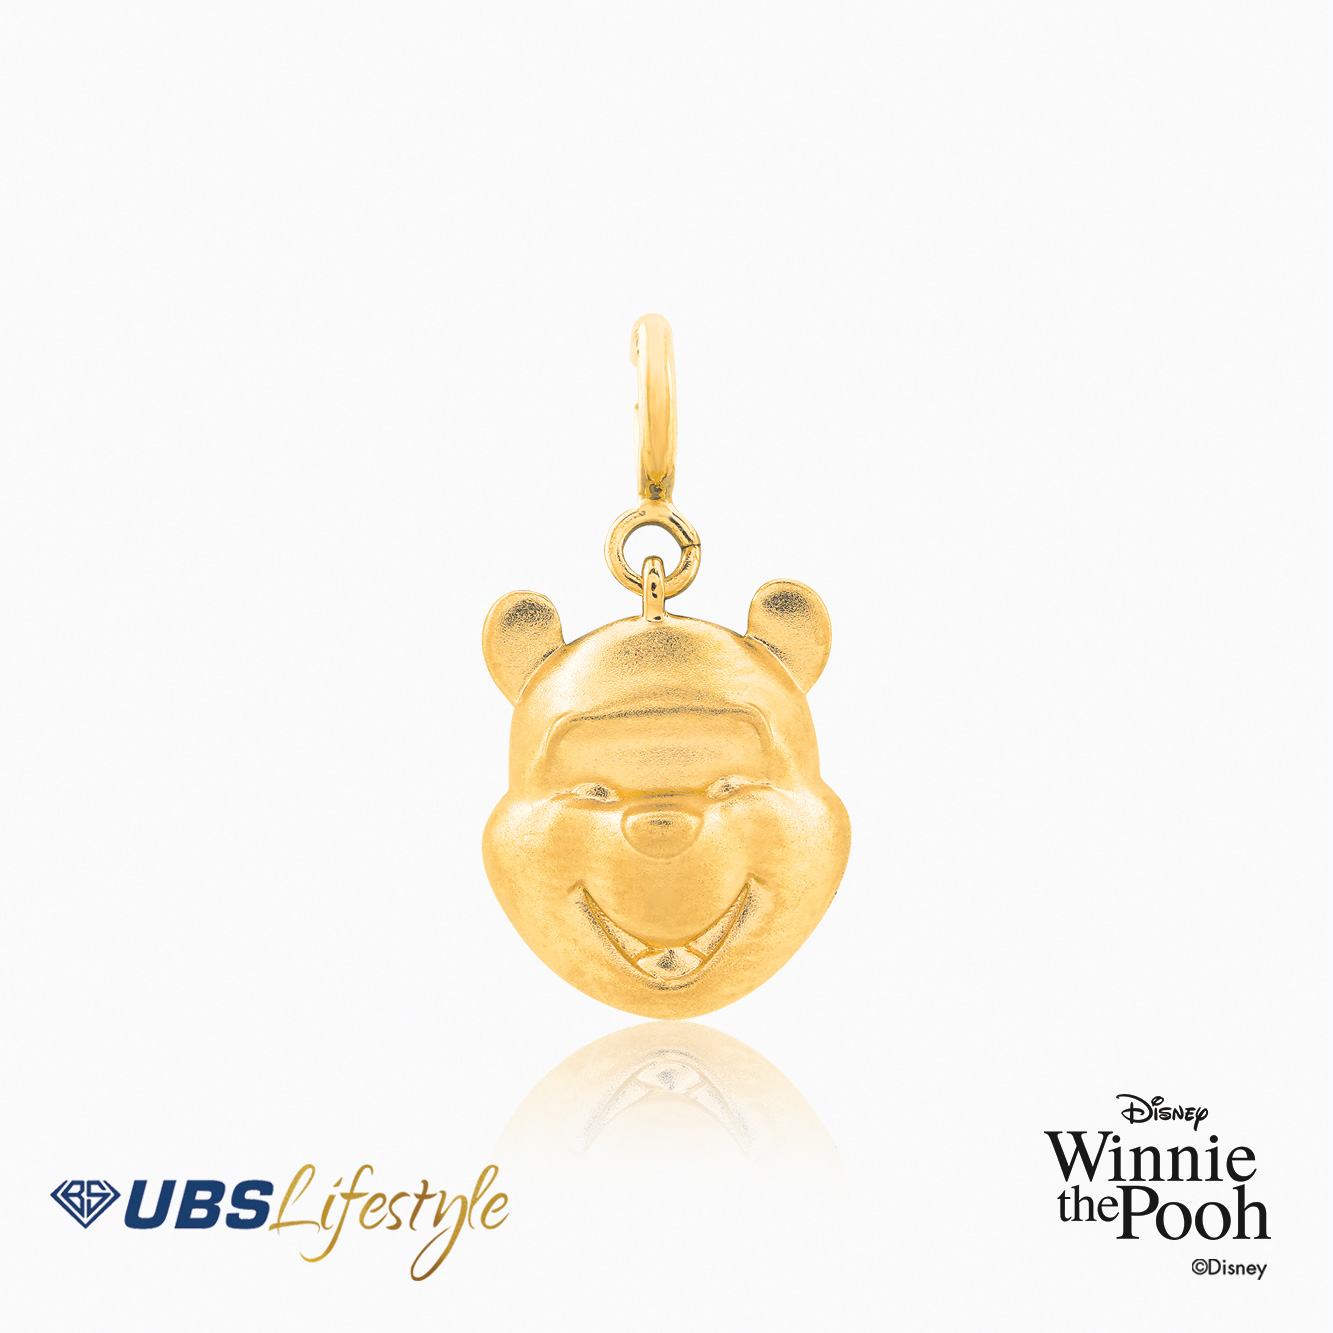 UBS Liontin Emas Disney Winnie The Pooh - Cmy0111 - 17K